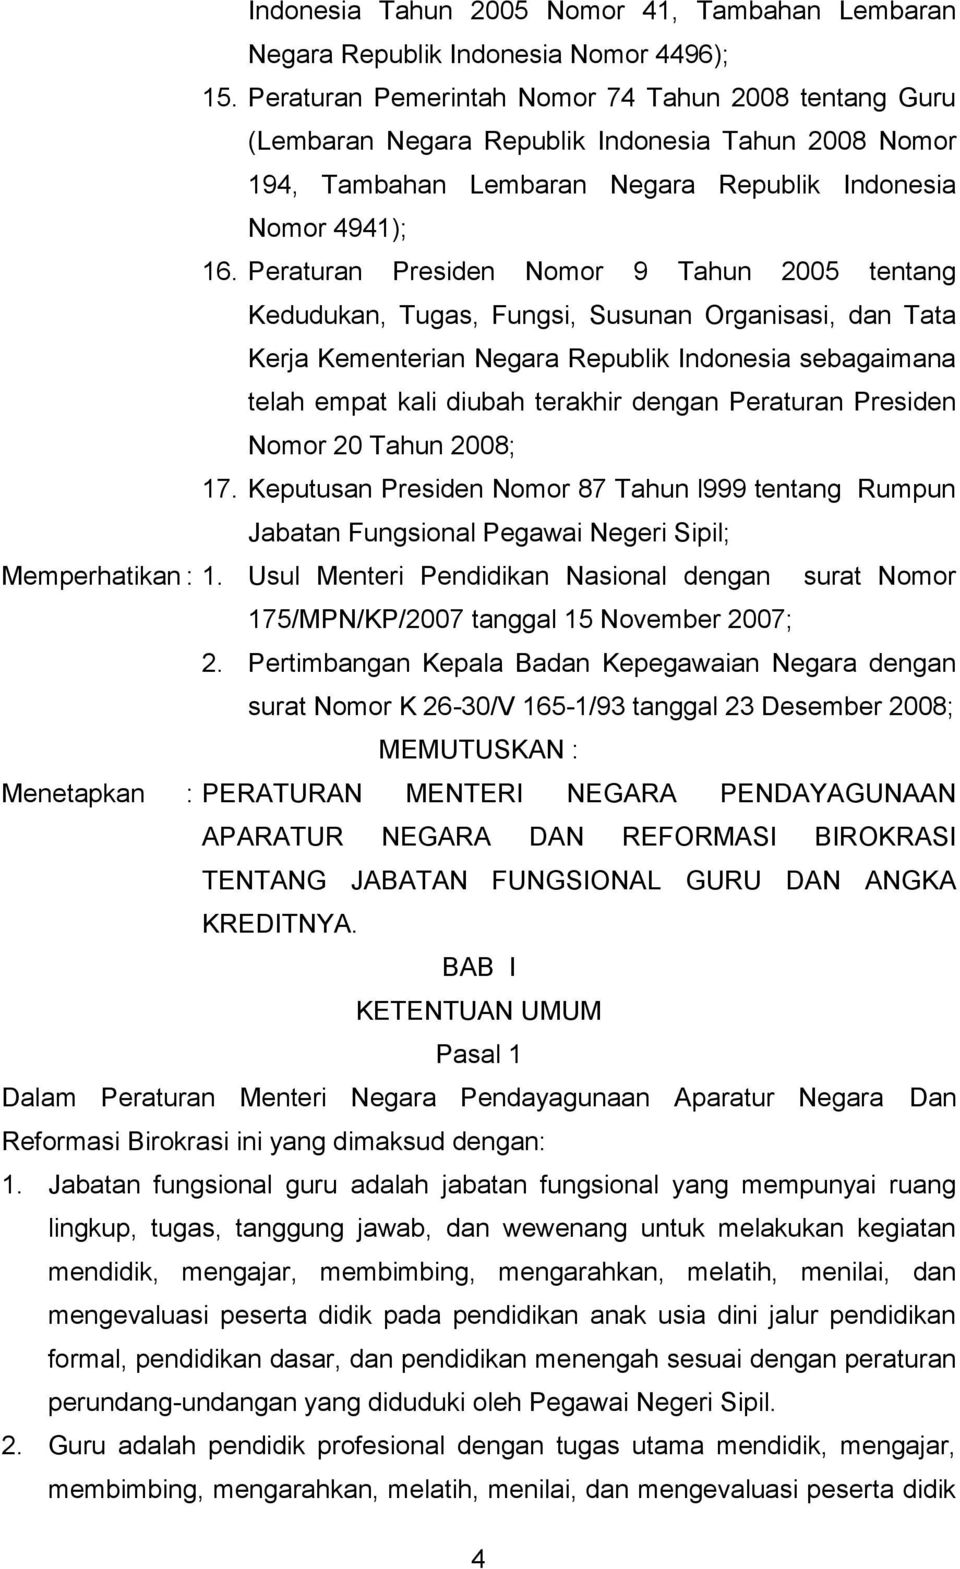 Peraturan Presiden Nomor 9 Tahun 2005 tentang Kedudukan, Tugas, Fungsi, Susunan Organisasi, dan Tata Kerja Kementerian Negara Republik Indonesia sebagaimana telah empat kali diubah terakhir dengan